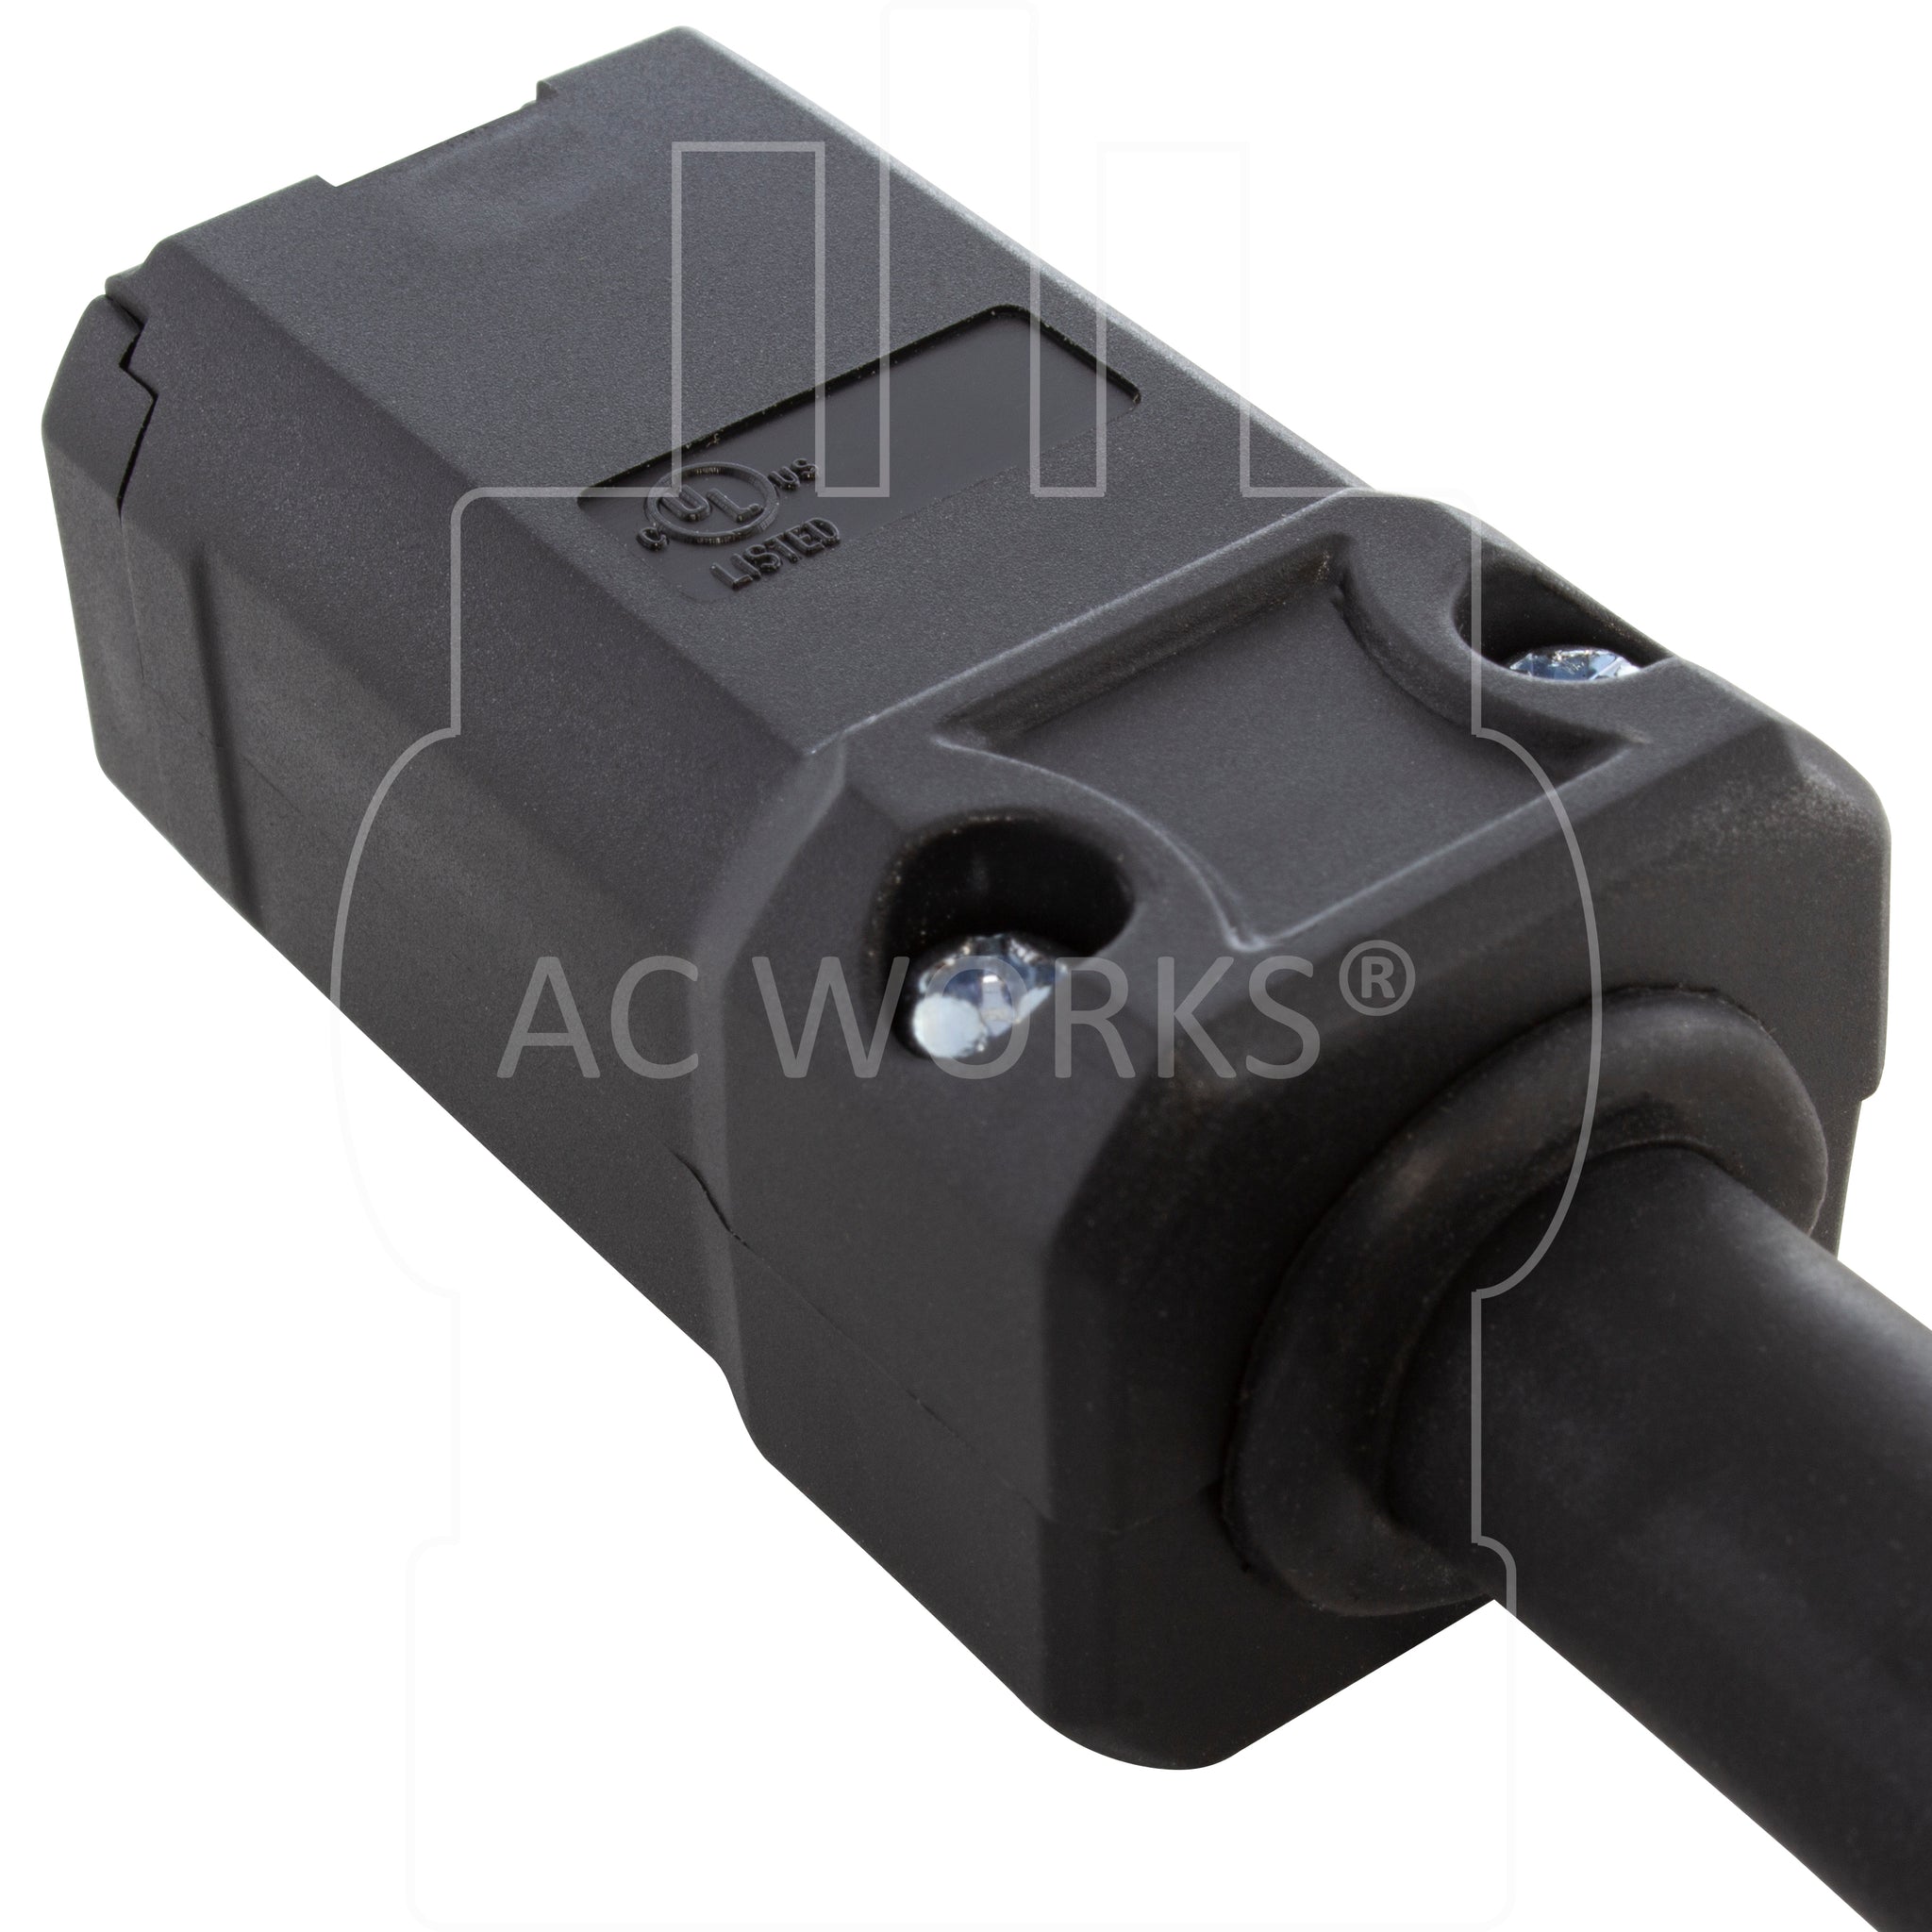 AC WORKS® [HD515PR] SOOW 12 Gauge NEMA 5-15 15A 125V Heavy Duty Outdoo – AC  Connectors